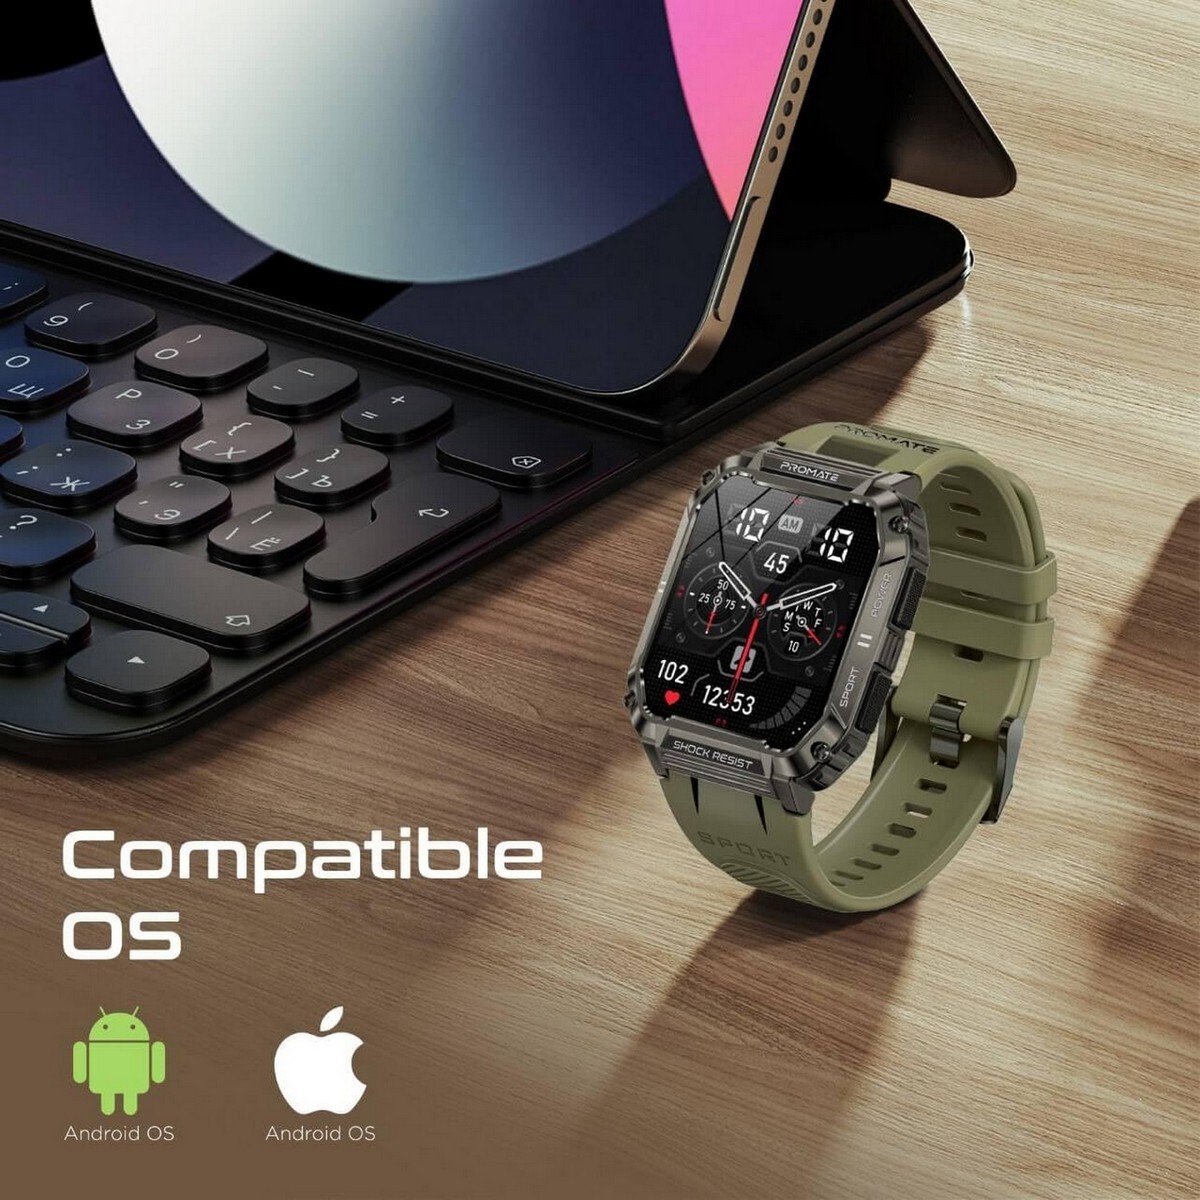 Promate Xwatch-S19 Smart Watch S19 Green